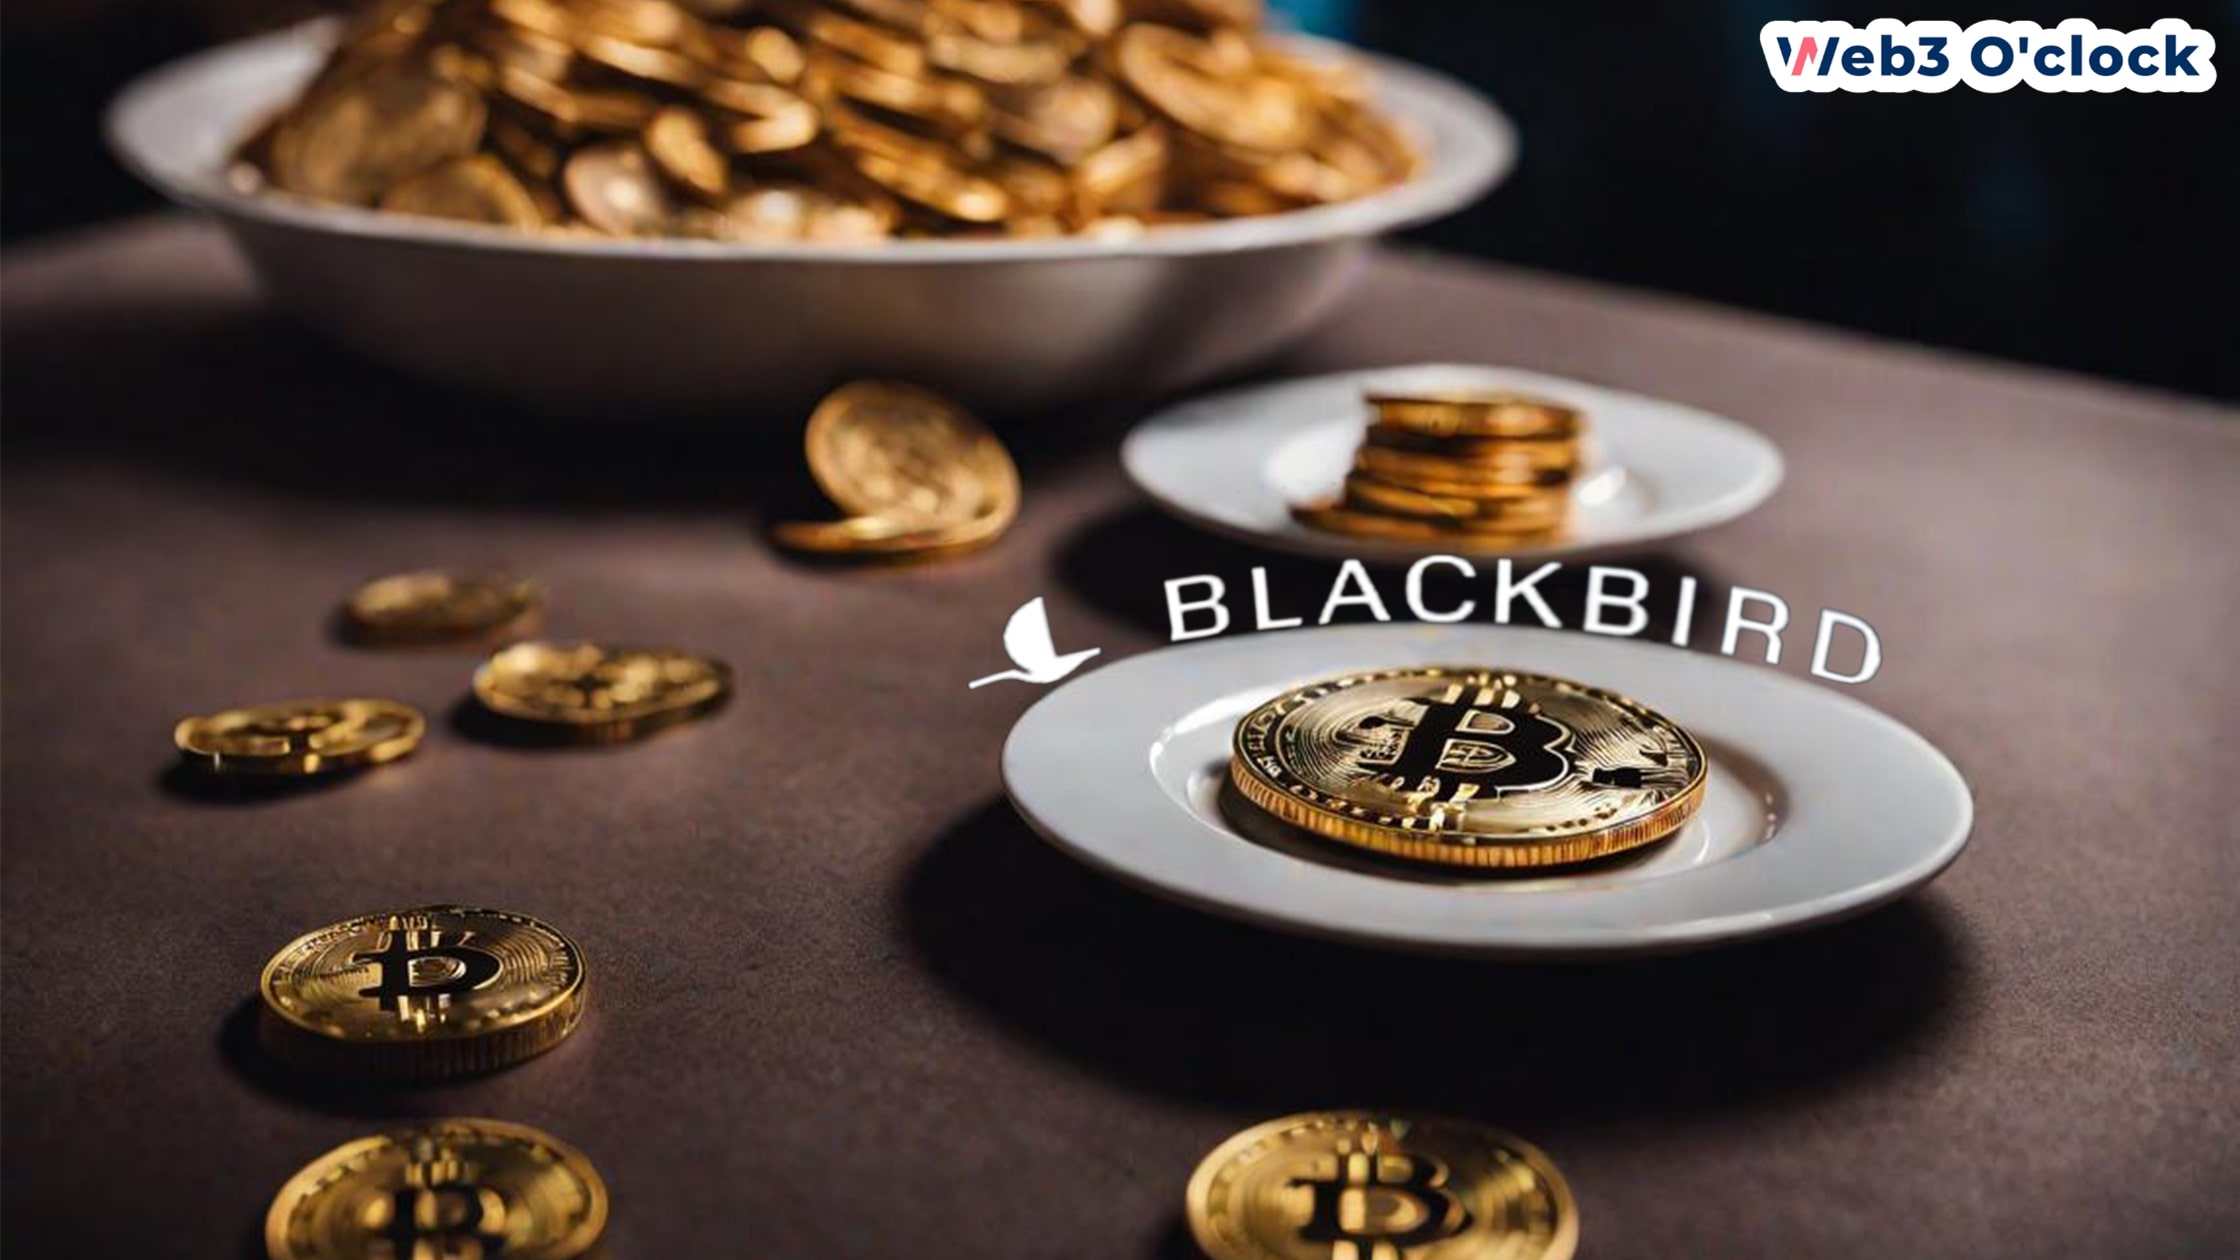 Blackbird Raises $24M by web3oclock